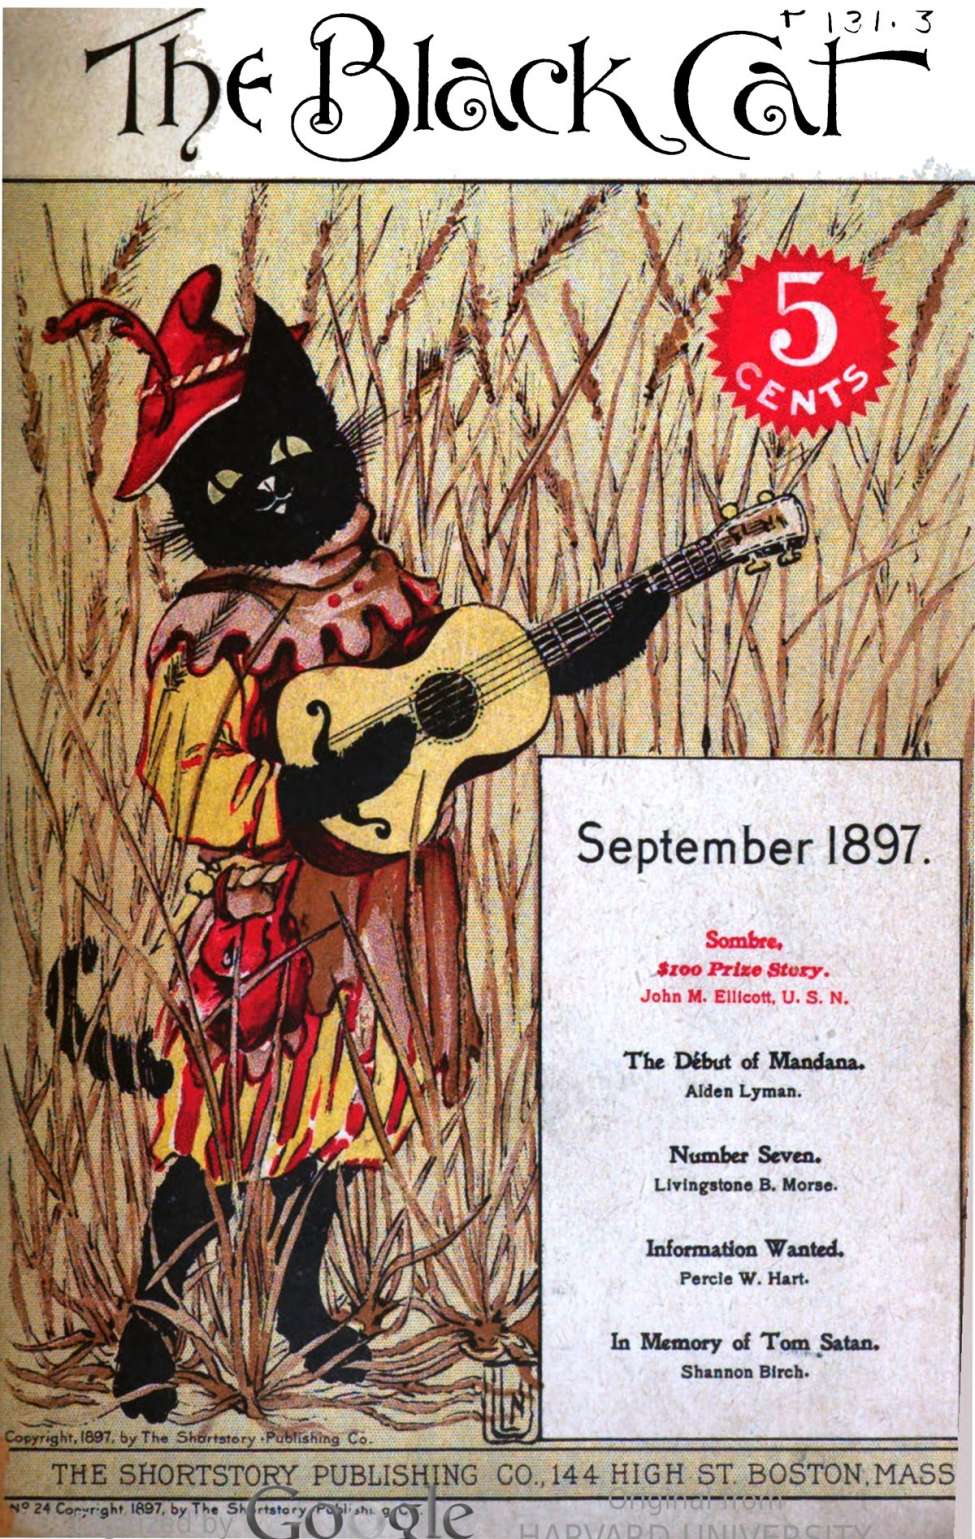 Comic Book Cover For The Black Cat v2 12 - Sombre - John M. Ellicott U.S.N.